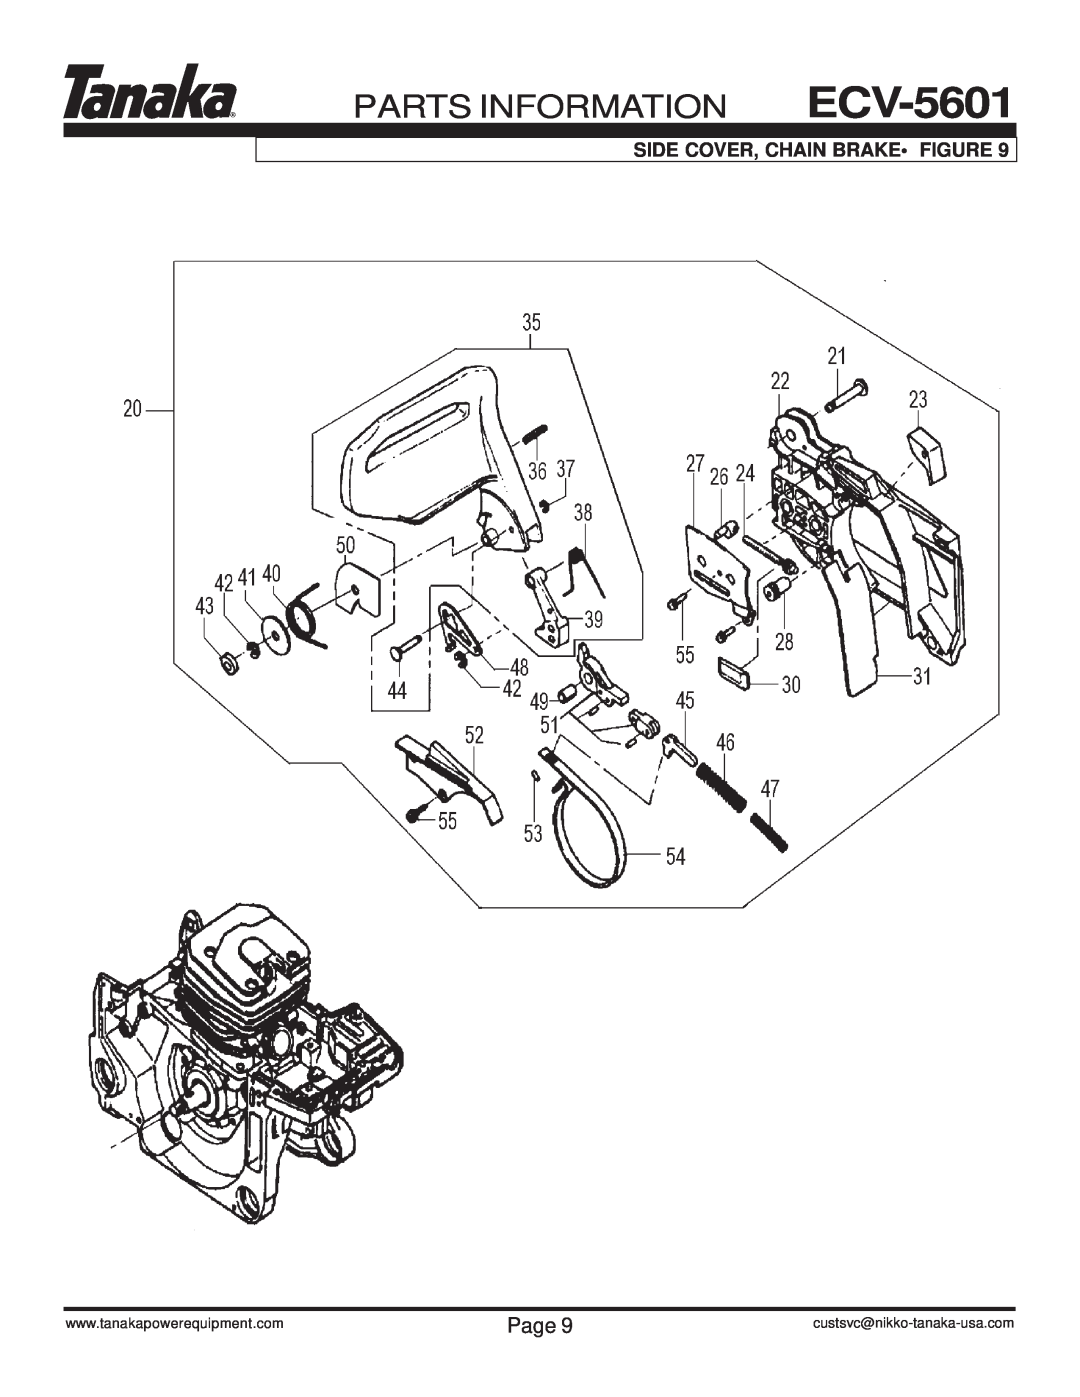 Tanaka manual Side Cover, Chain Brake Figure, PARTS INFORMATION ECV-5601, Page, custsvc@nikko-tanaka-usa.com 